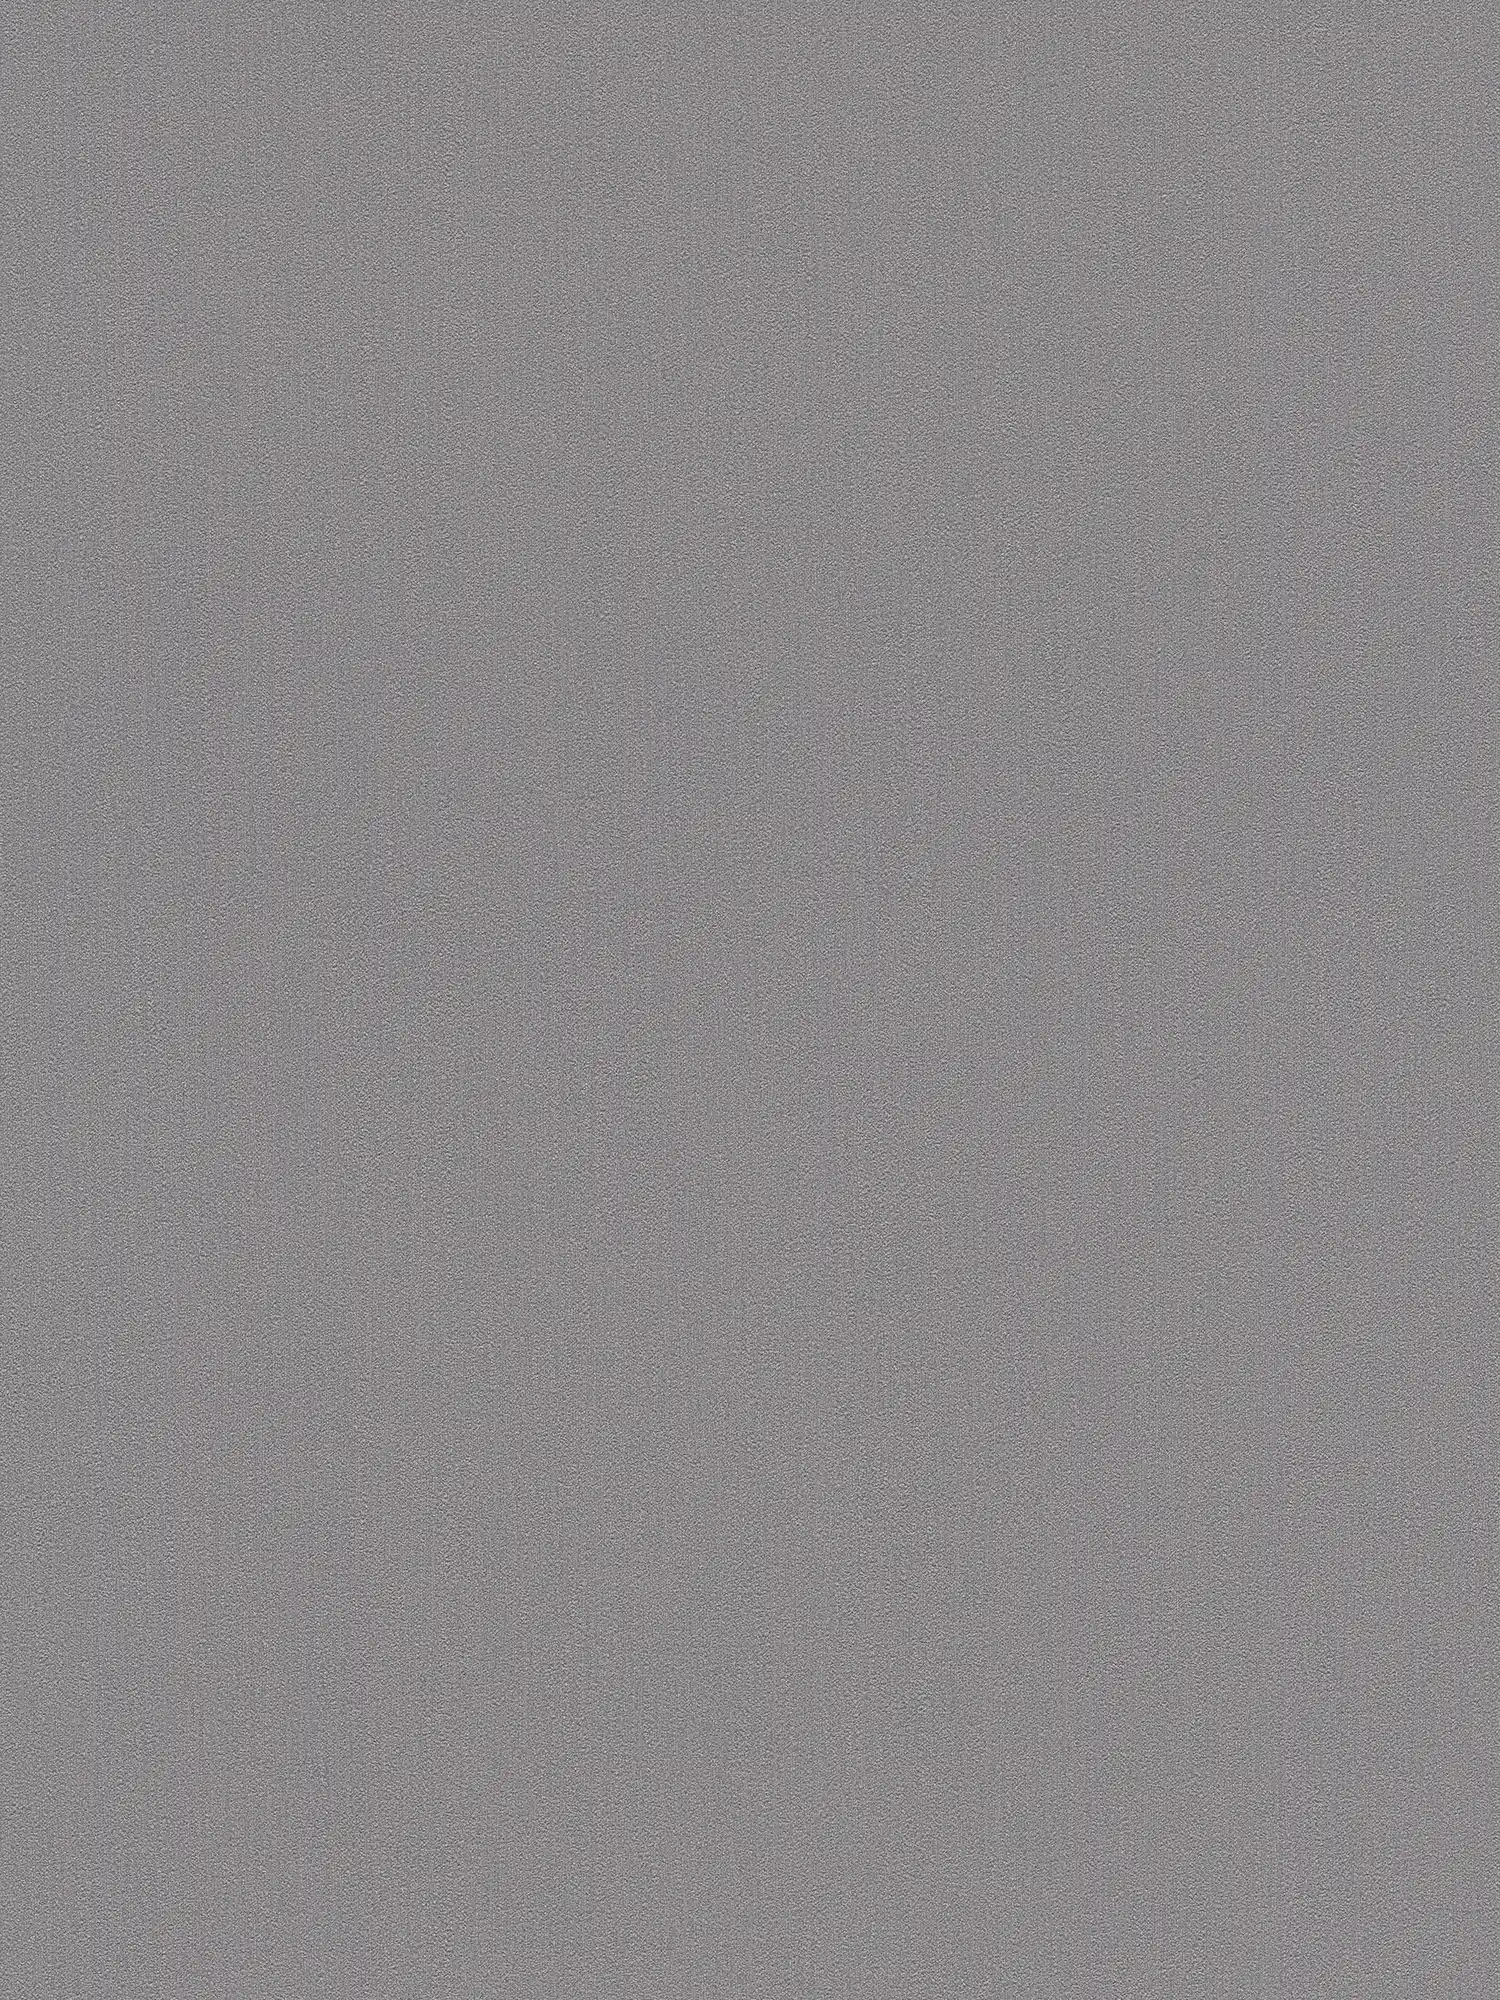 Karl LAGERFELD Tapete monochrom mit Textur – Grau
